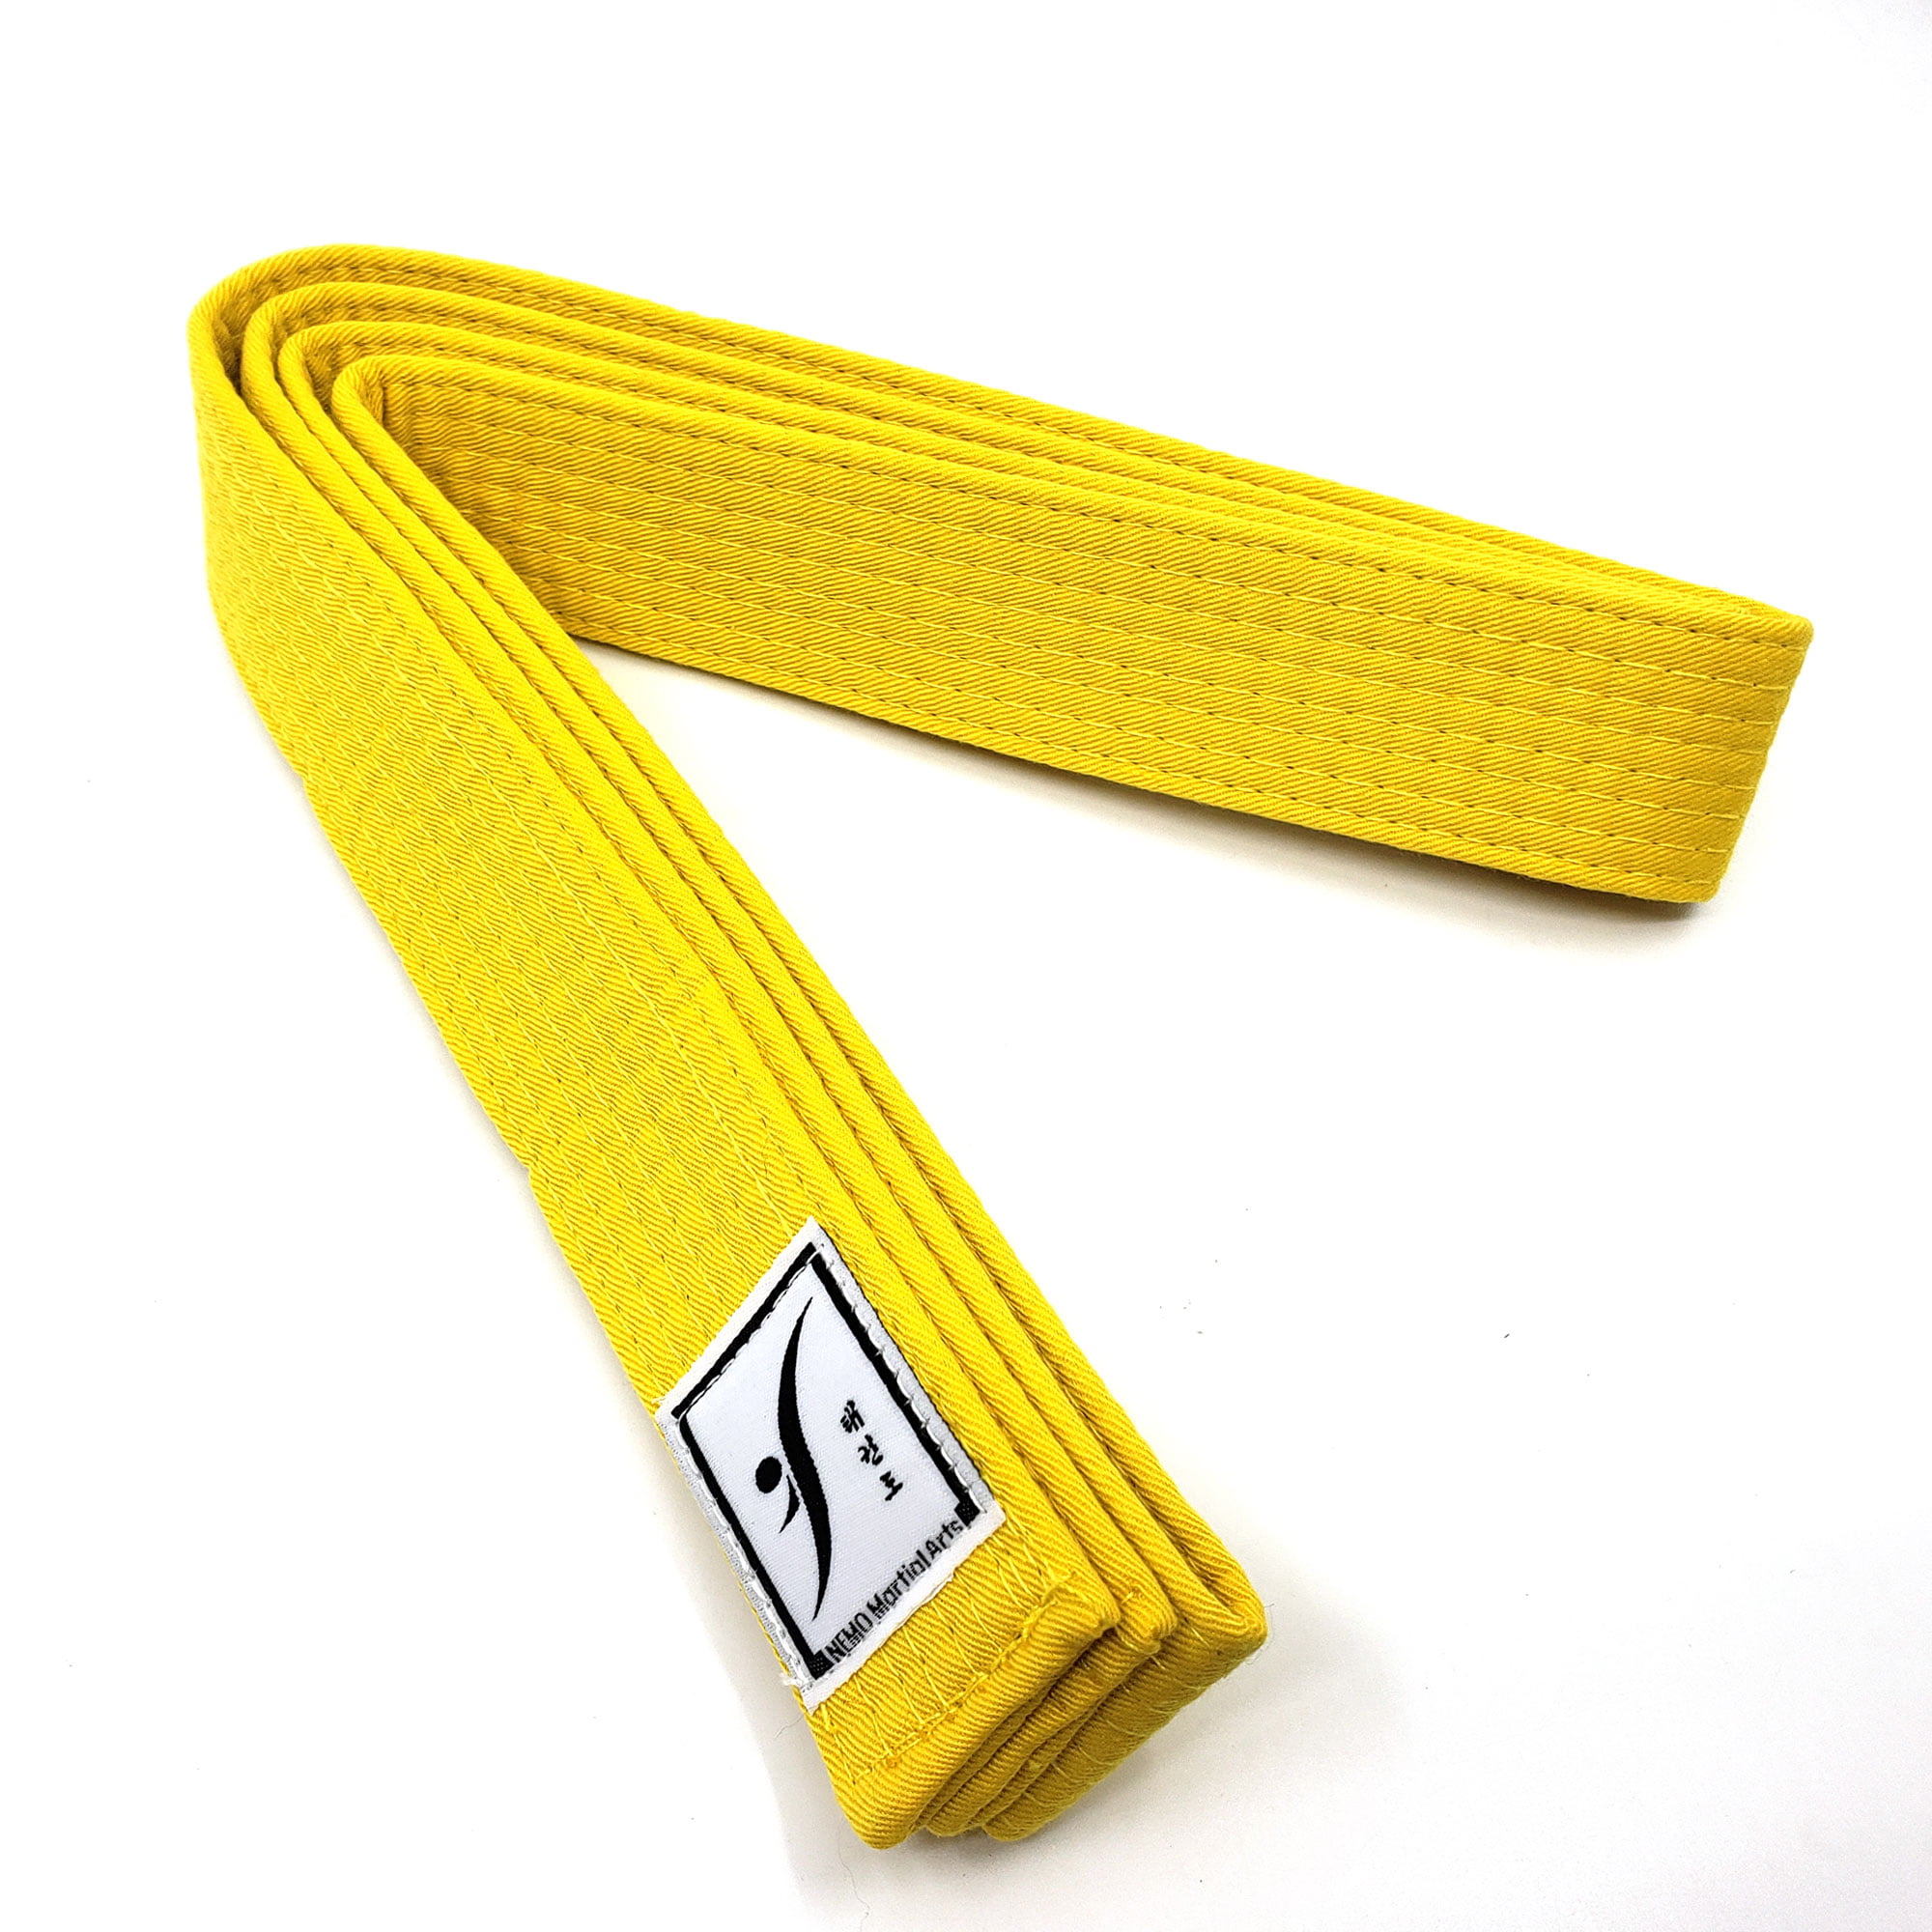 New Martial Arts 1-1/2" Wide Double Wrap Karate Taekwondo Color Belts FREE SHIP 